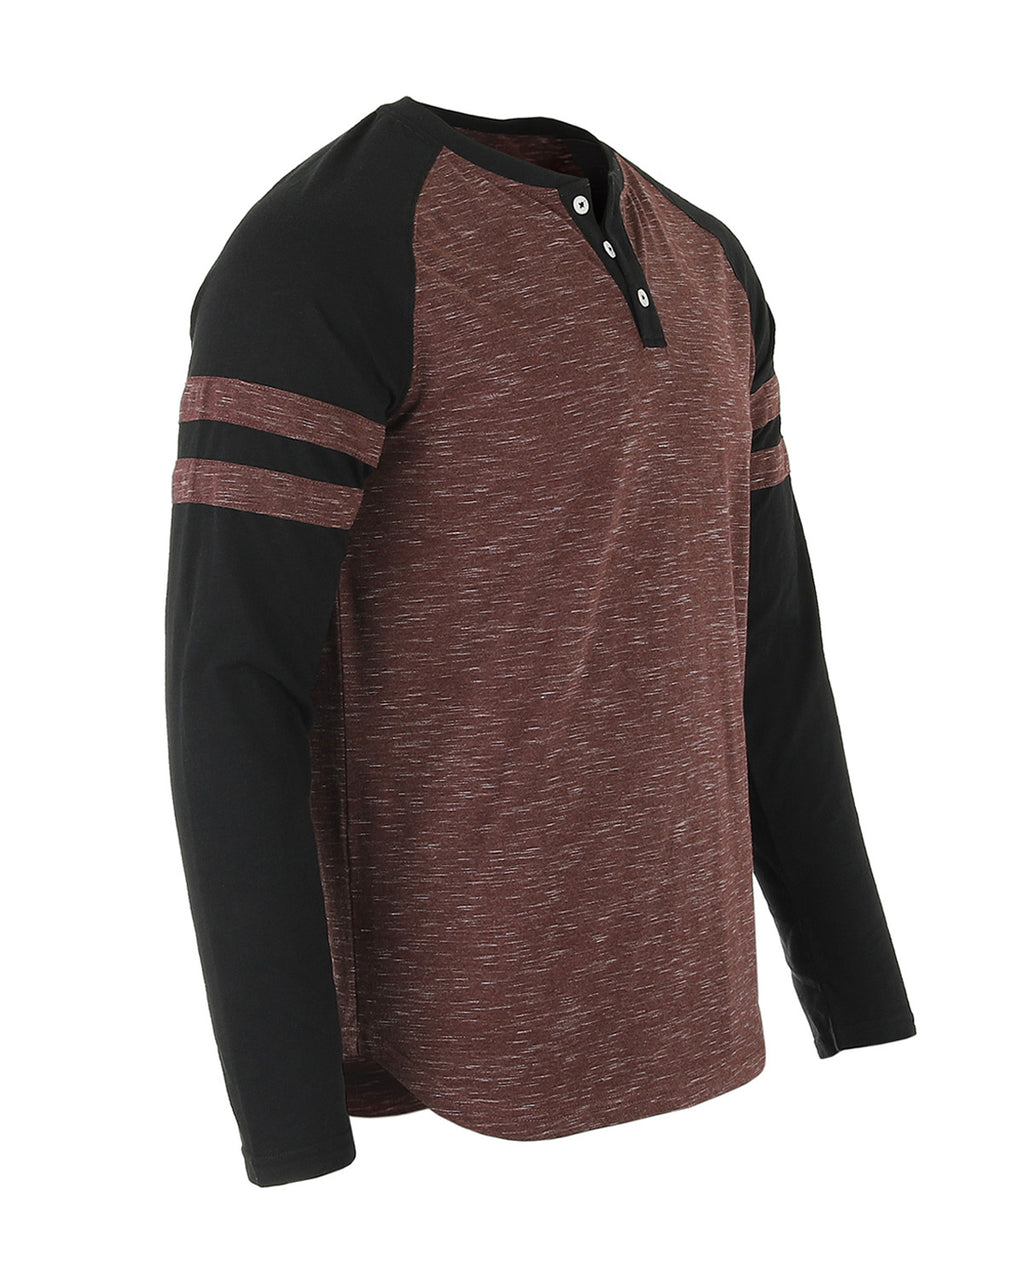 ZIMEGO Men’s Casual Long Sleeve Baseball Raglan Athletic Fashion Henley Shirt